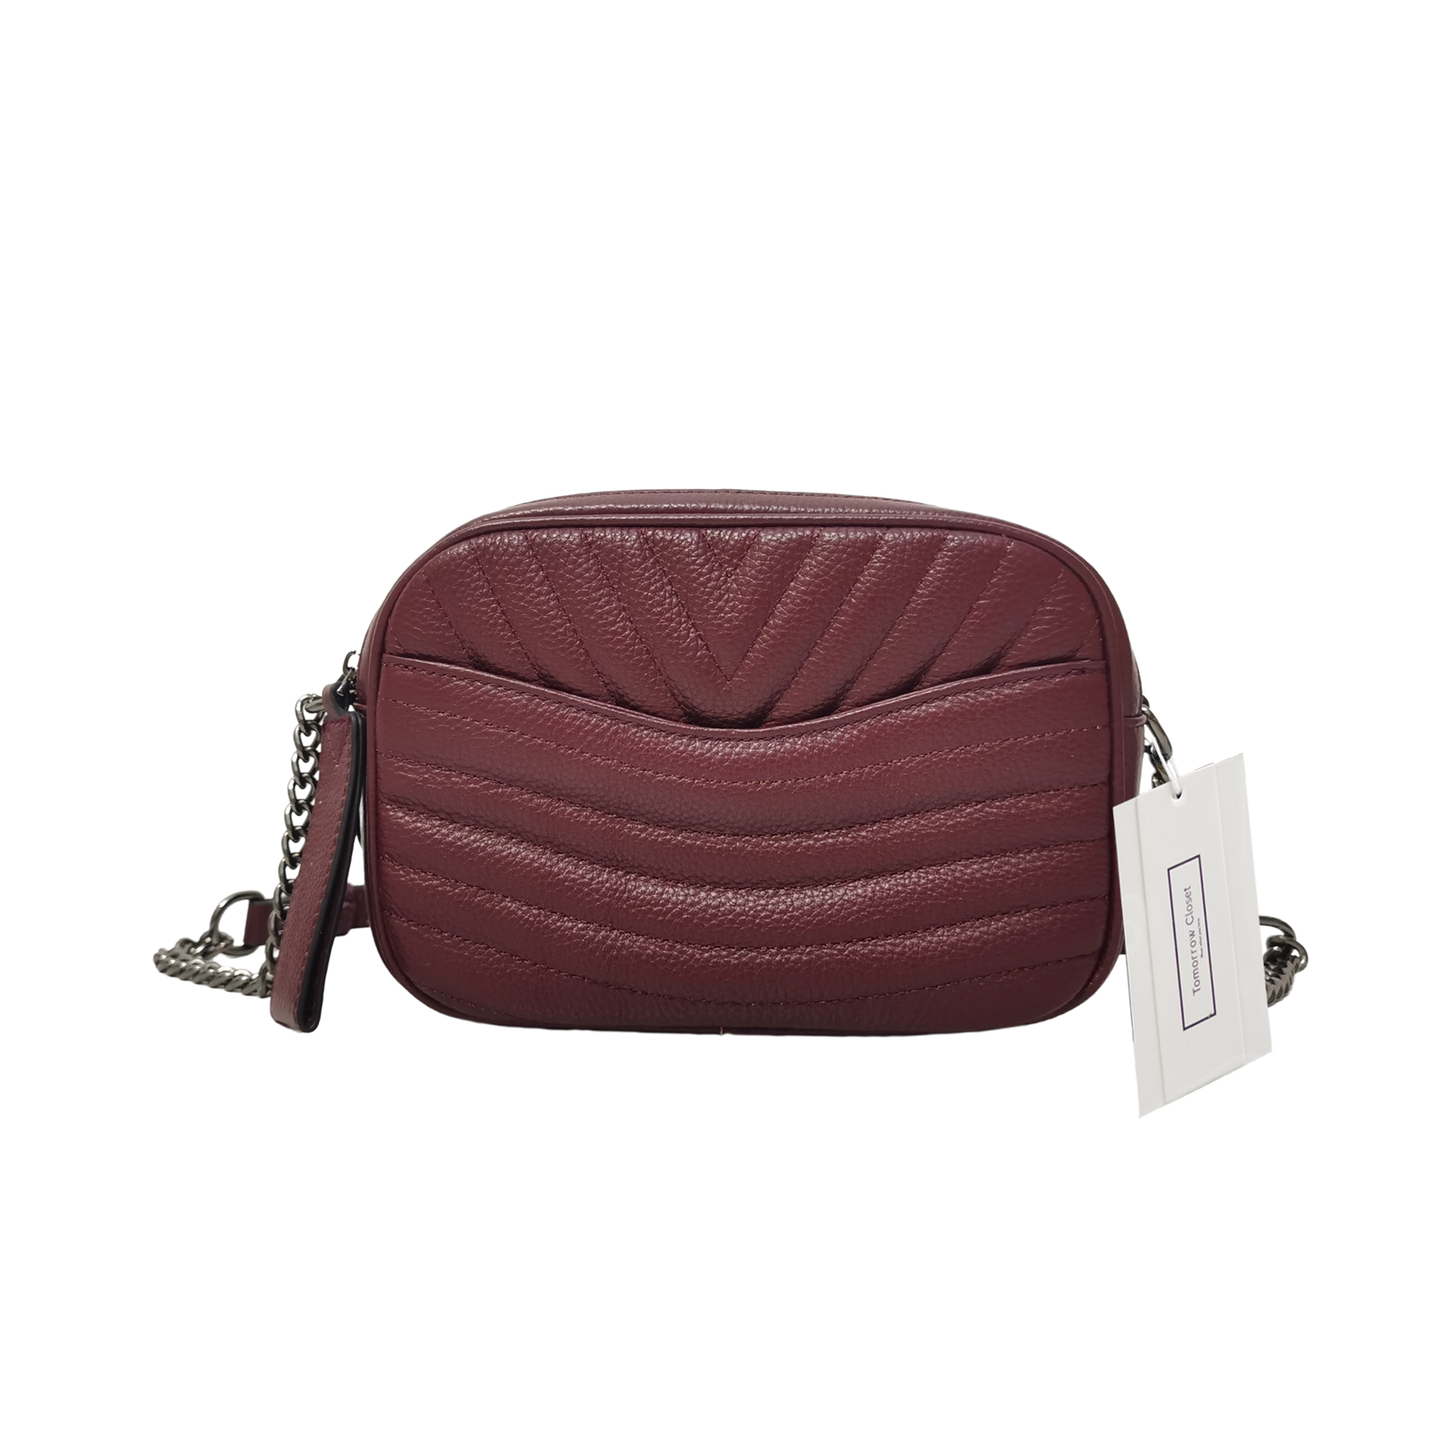 Women's genuine cowhide leather handbag Murca chevron design